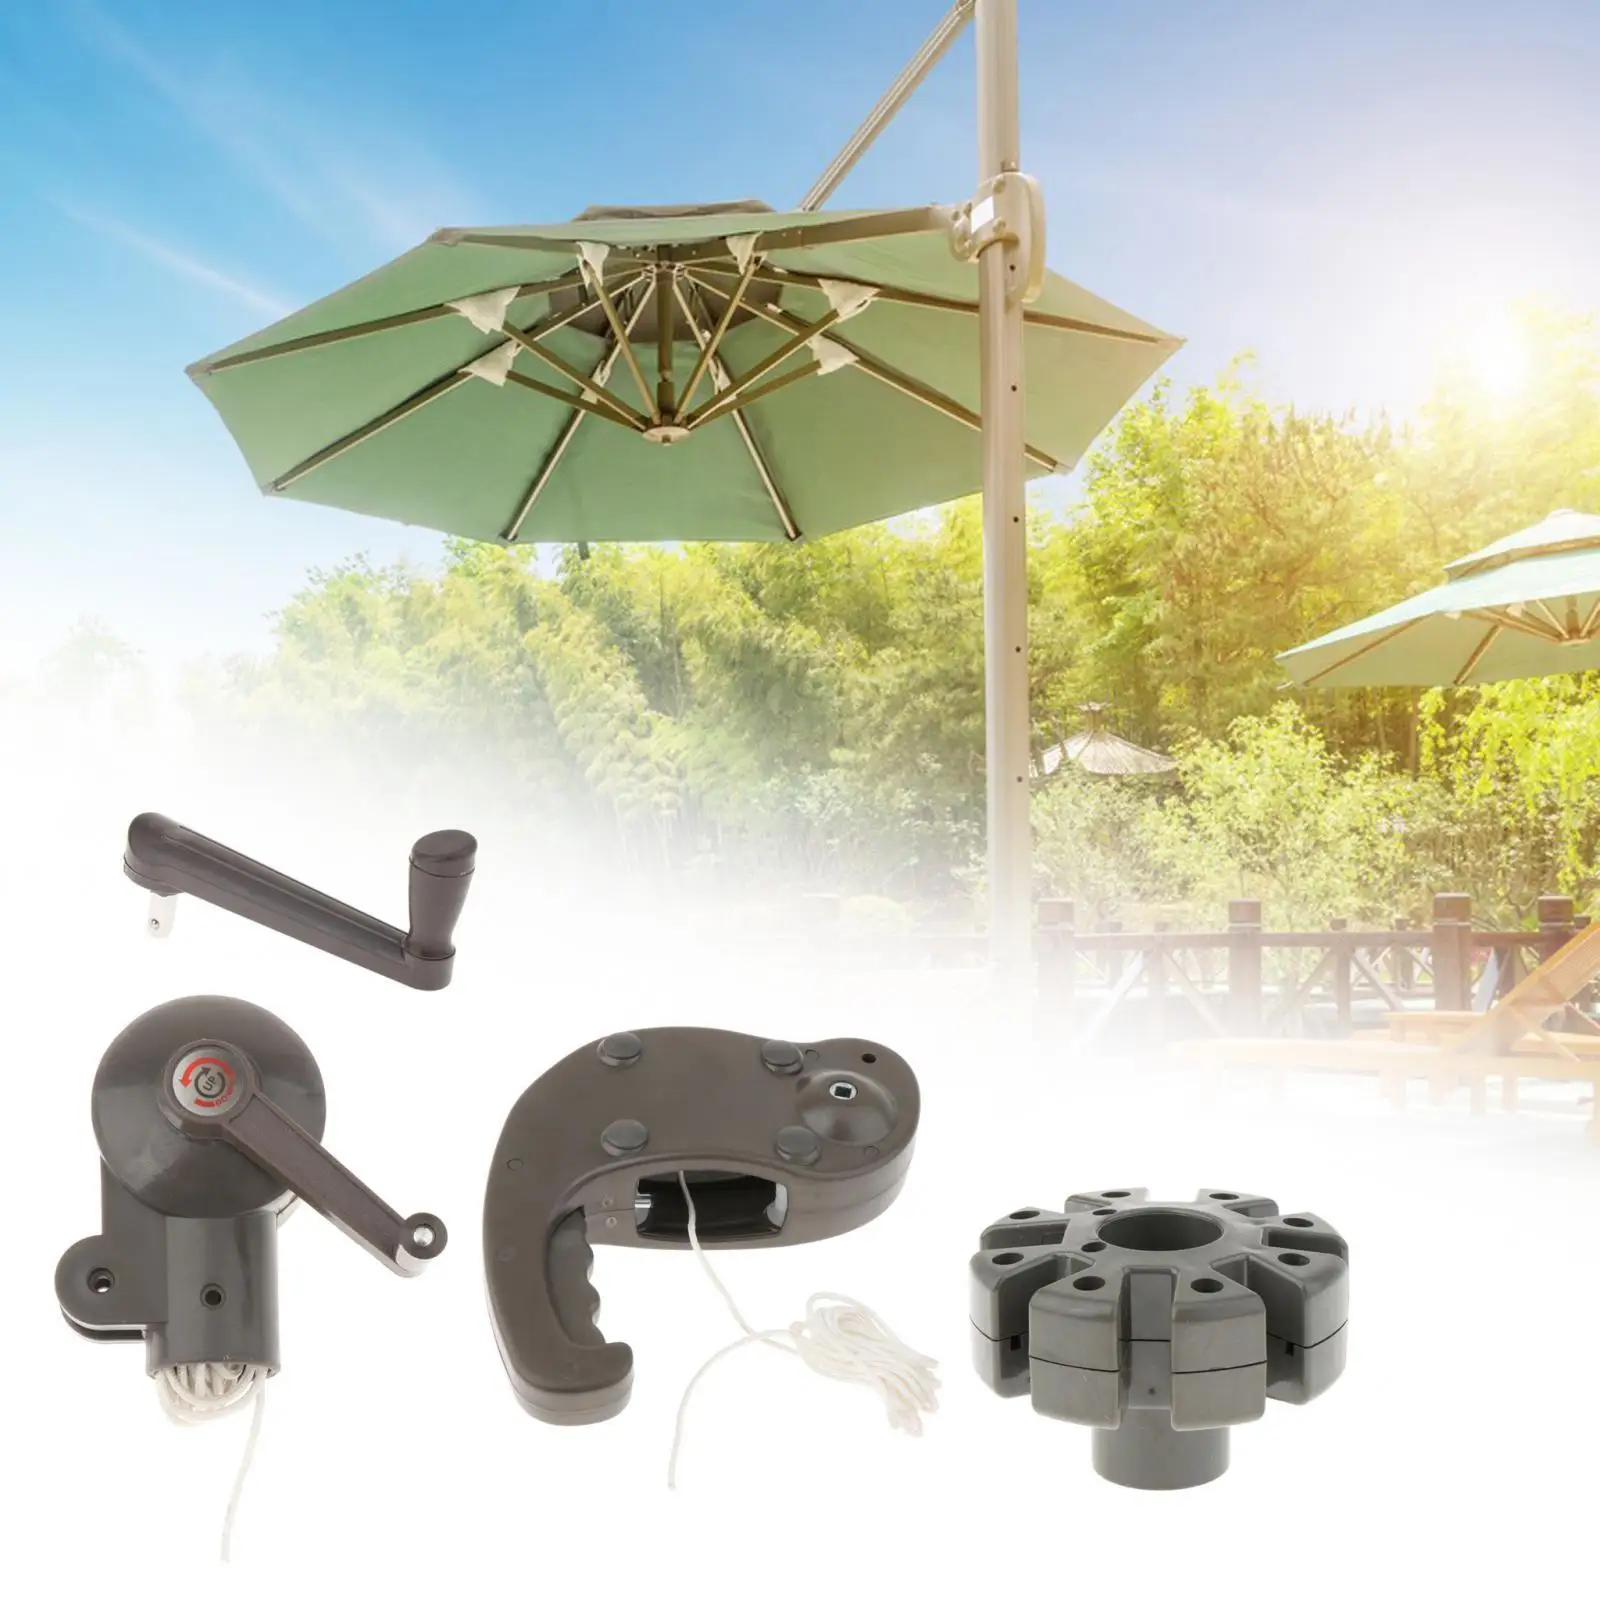 Parasol Accessories Parasol Accessories Replace Crank Handle Leisure Support